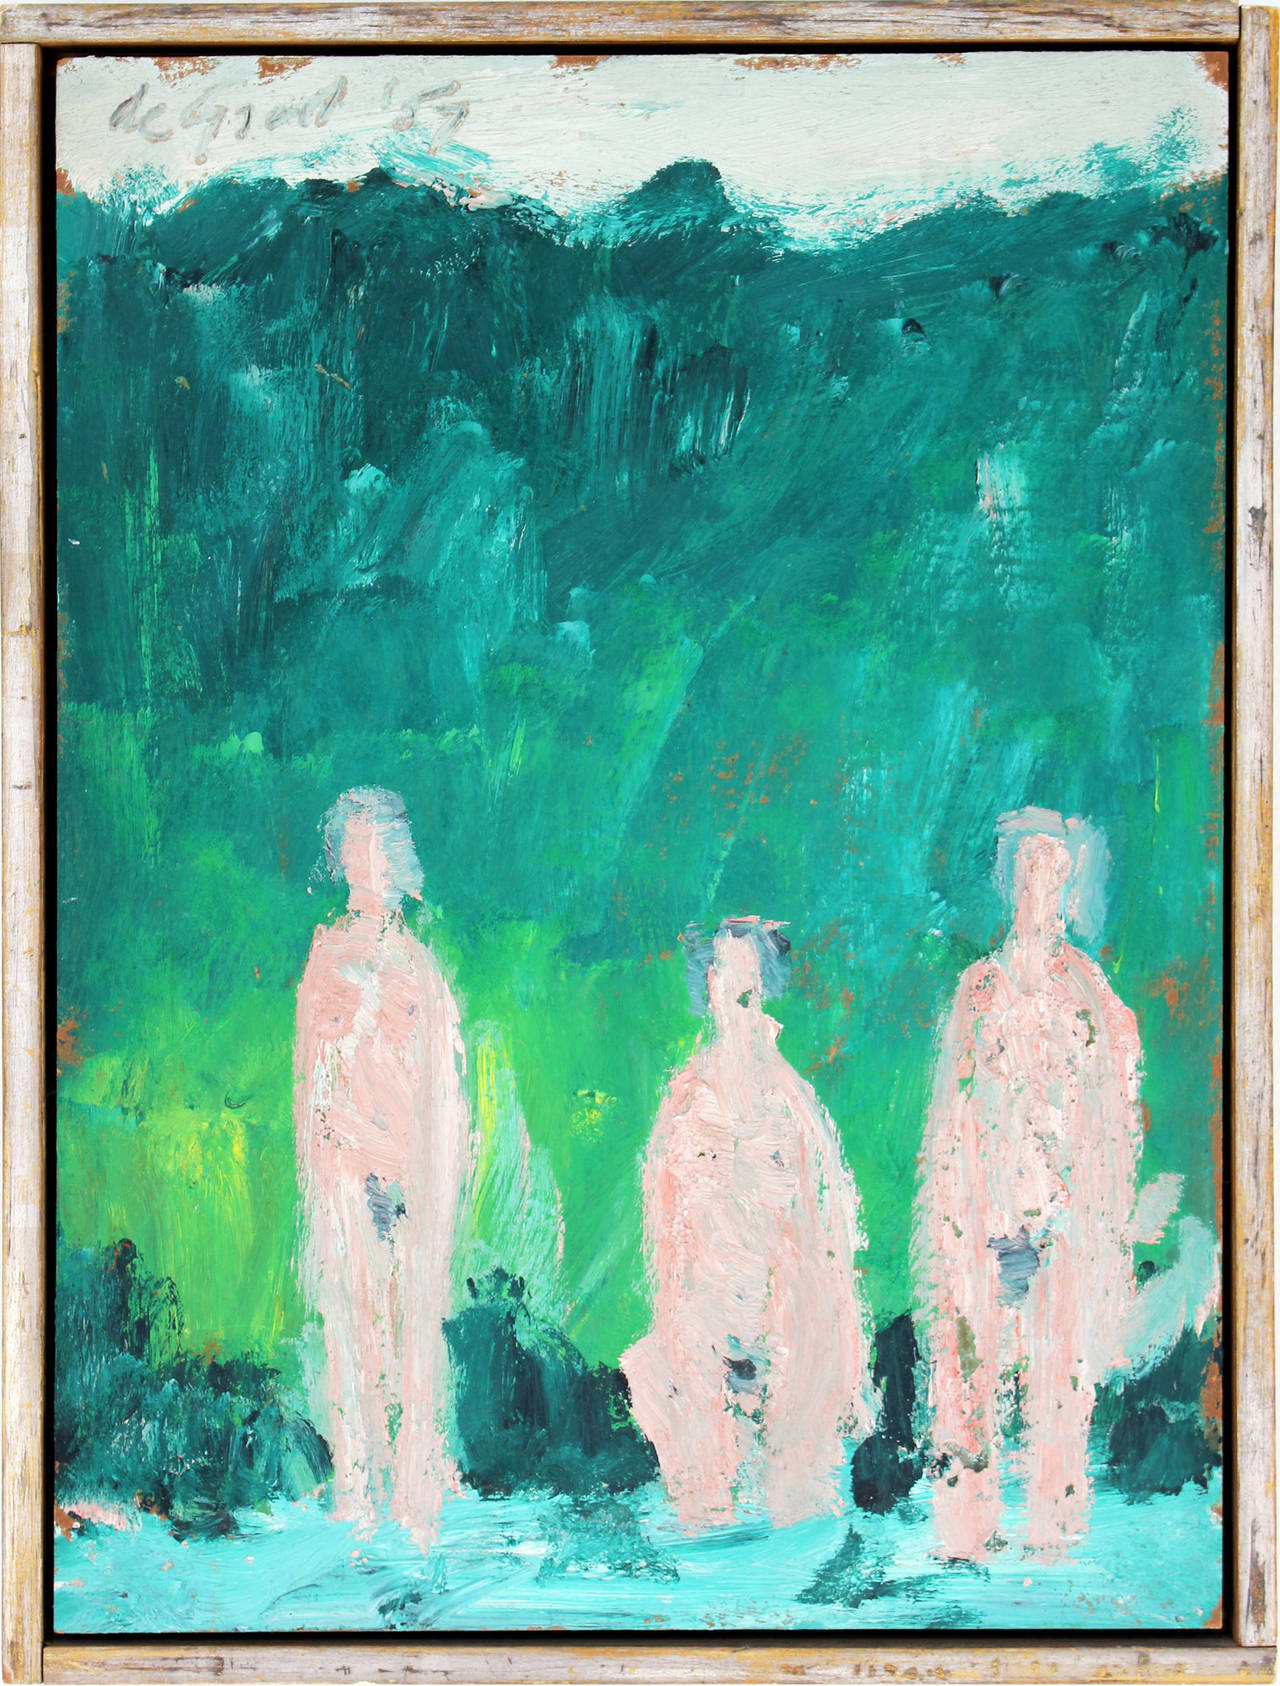 Nanno de Groot Landscape Painting - Three Figures in a Landscape